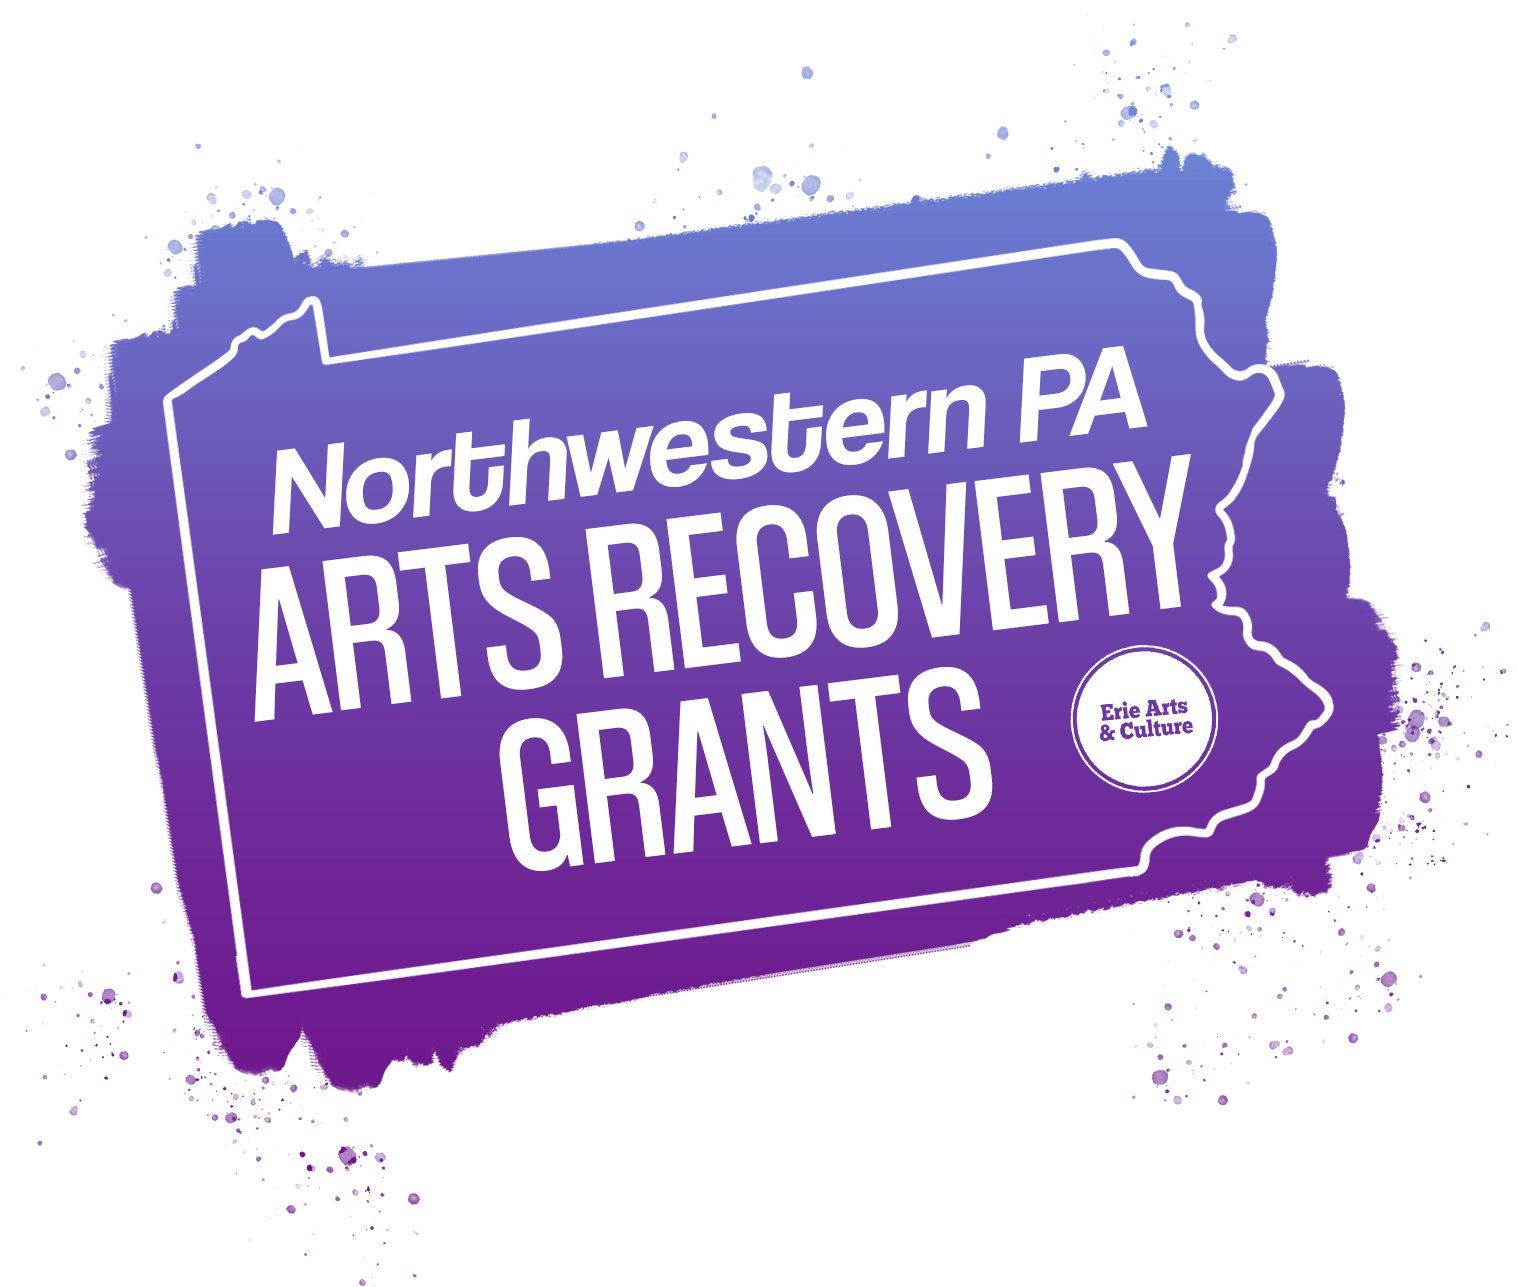 nwpa arts recovery grantsArtboard 2